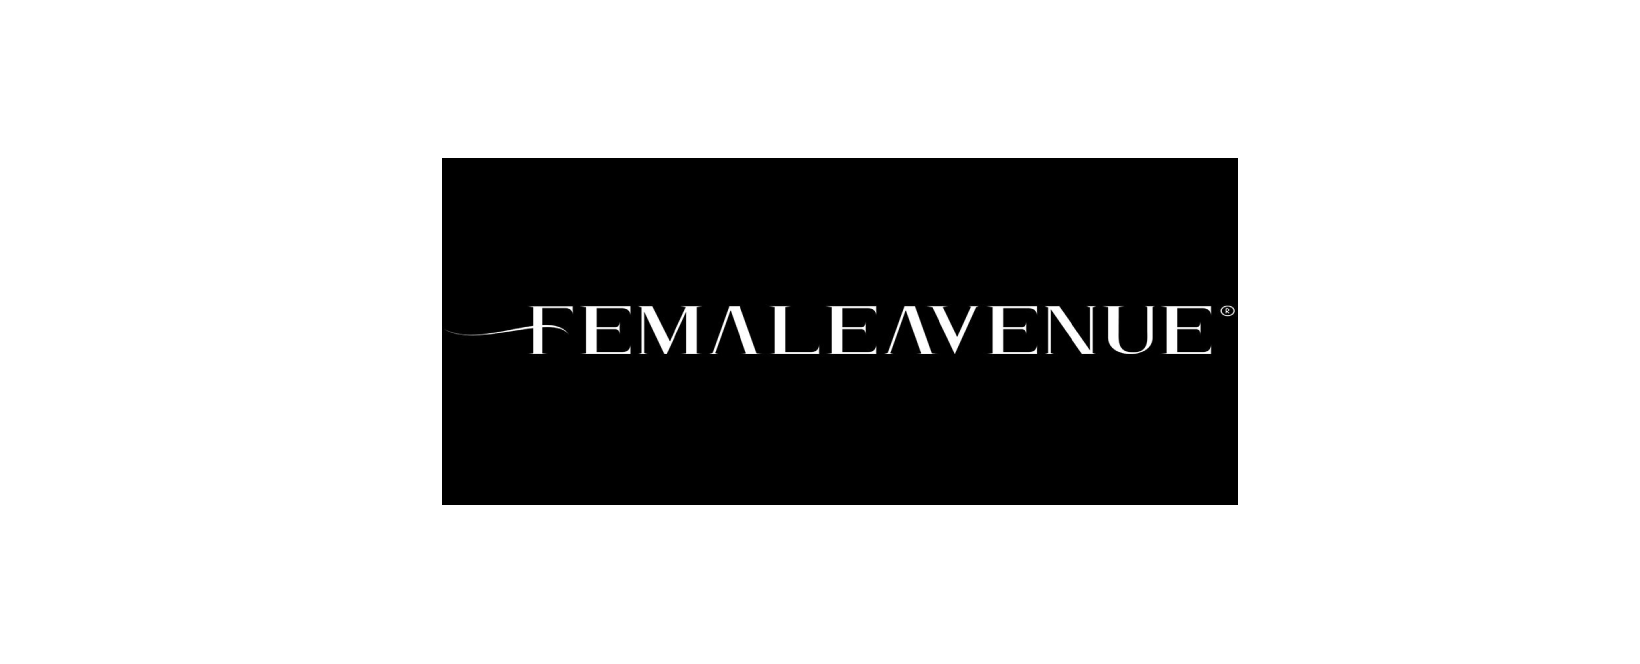 Female Avenue UK Discount Code 2022